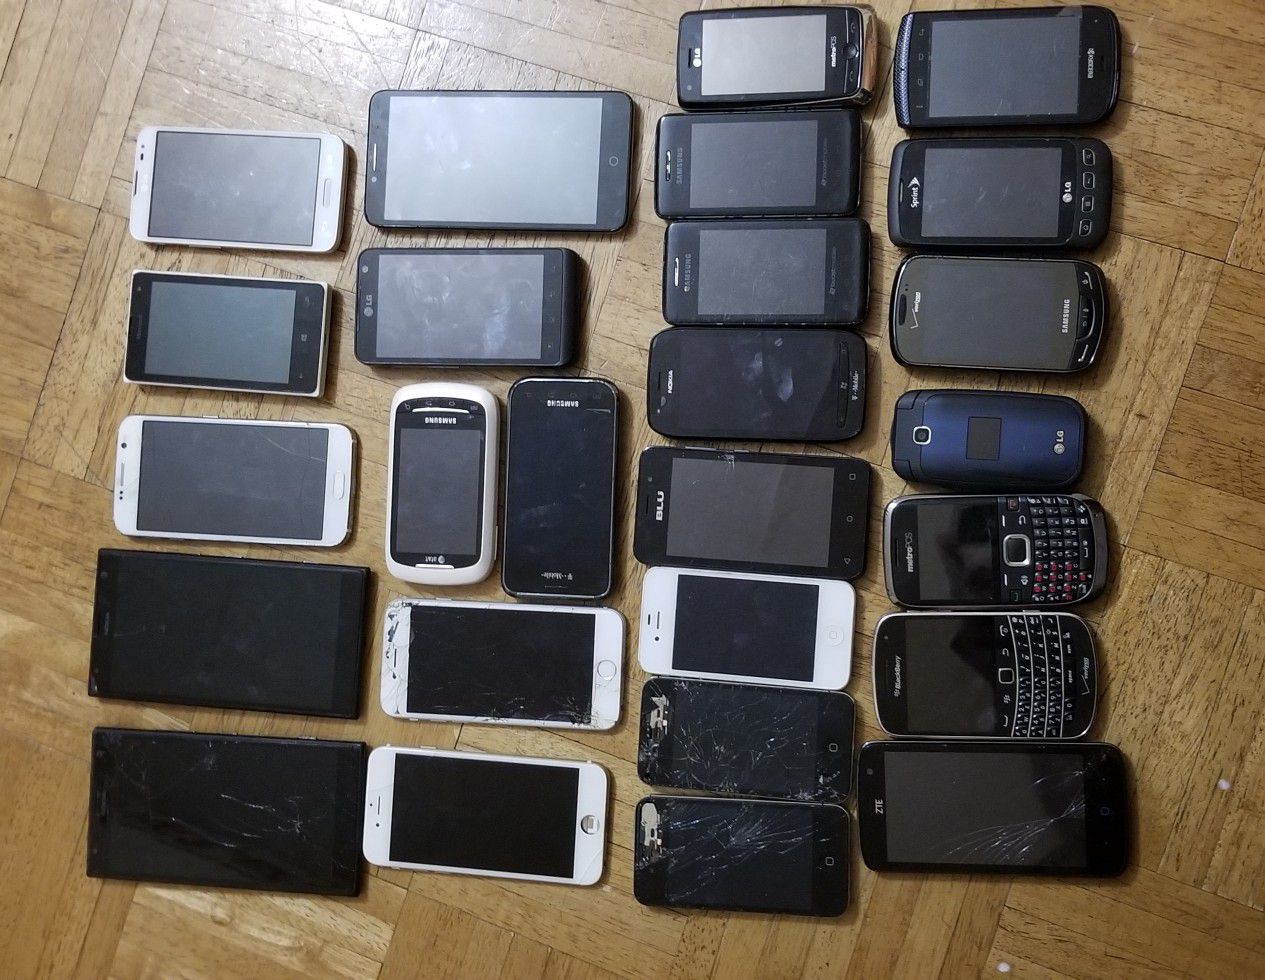 Phone lot of 26 unit